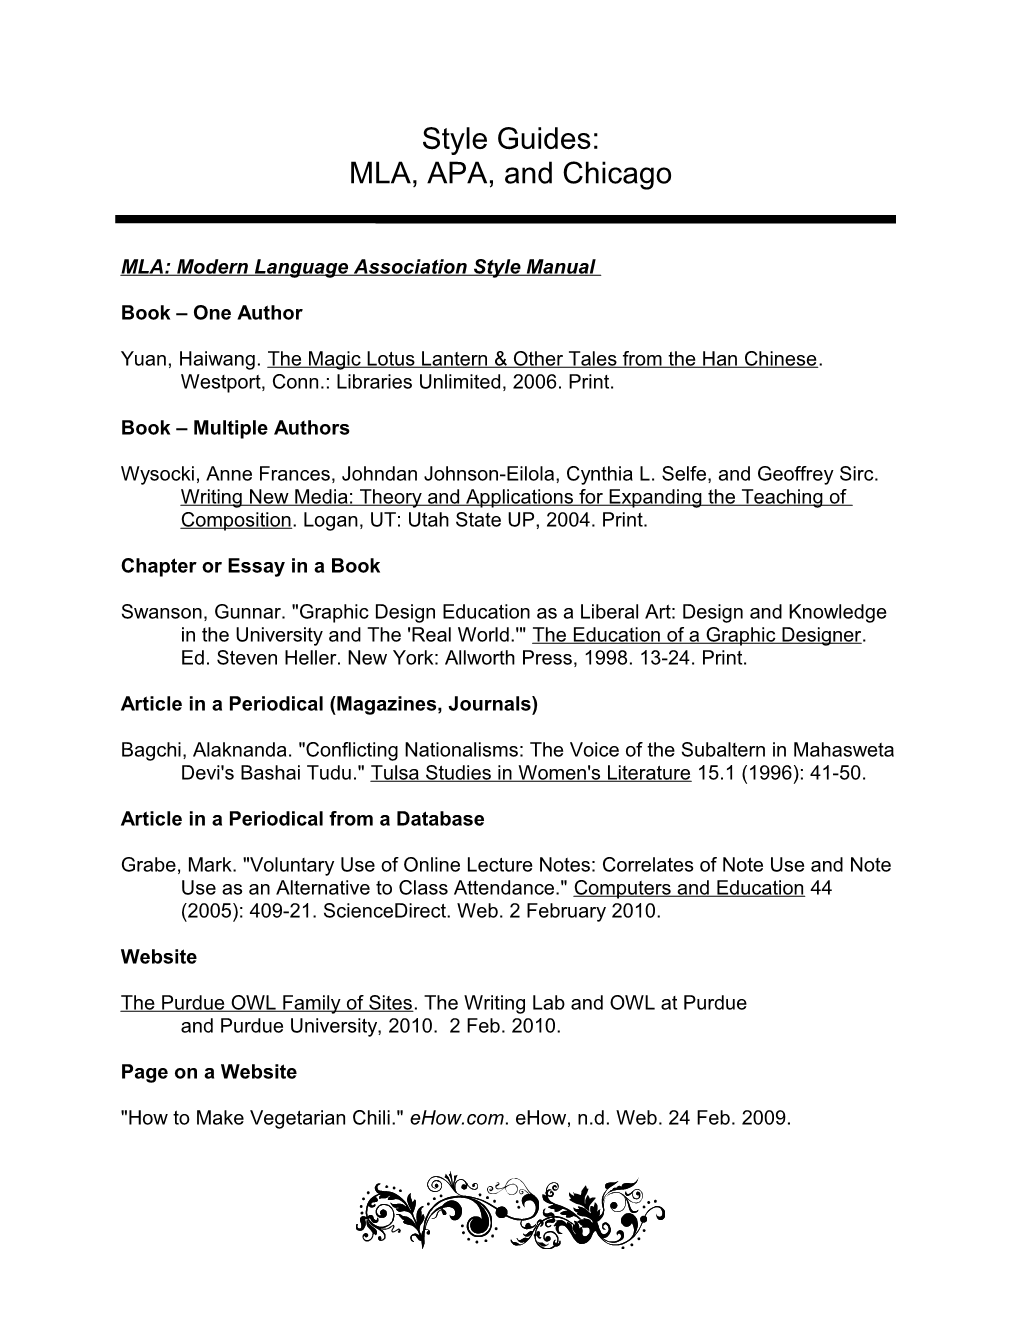 MLA: Modern Language Association Style Manual